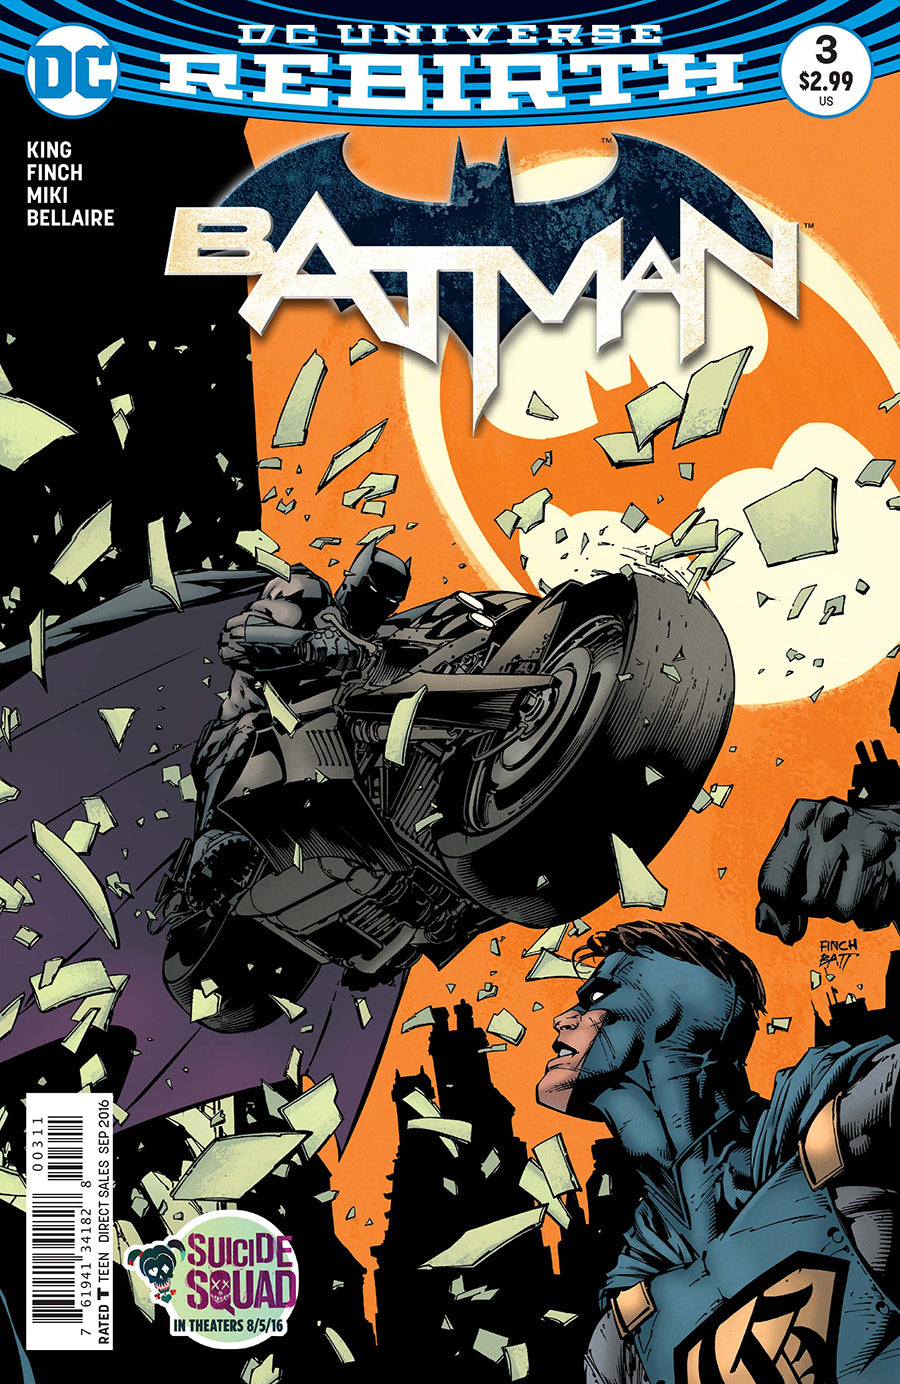 BATMAN #3 A DC 2016 David Finch Tom King